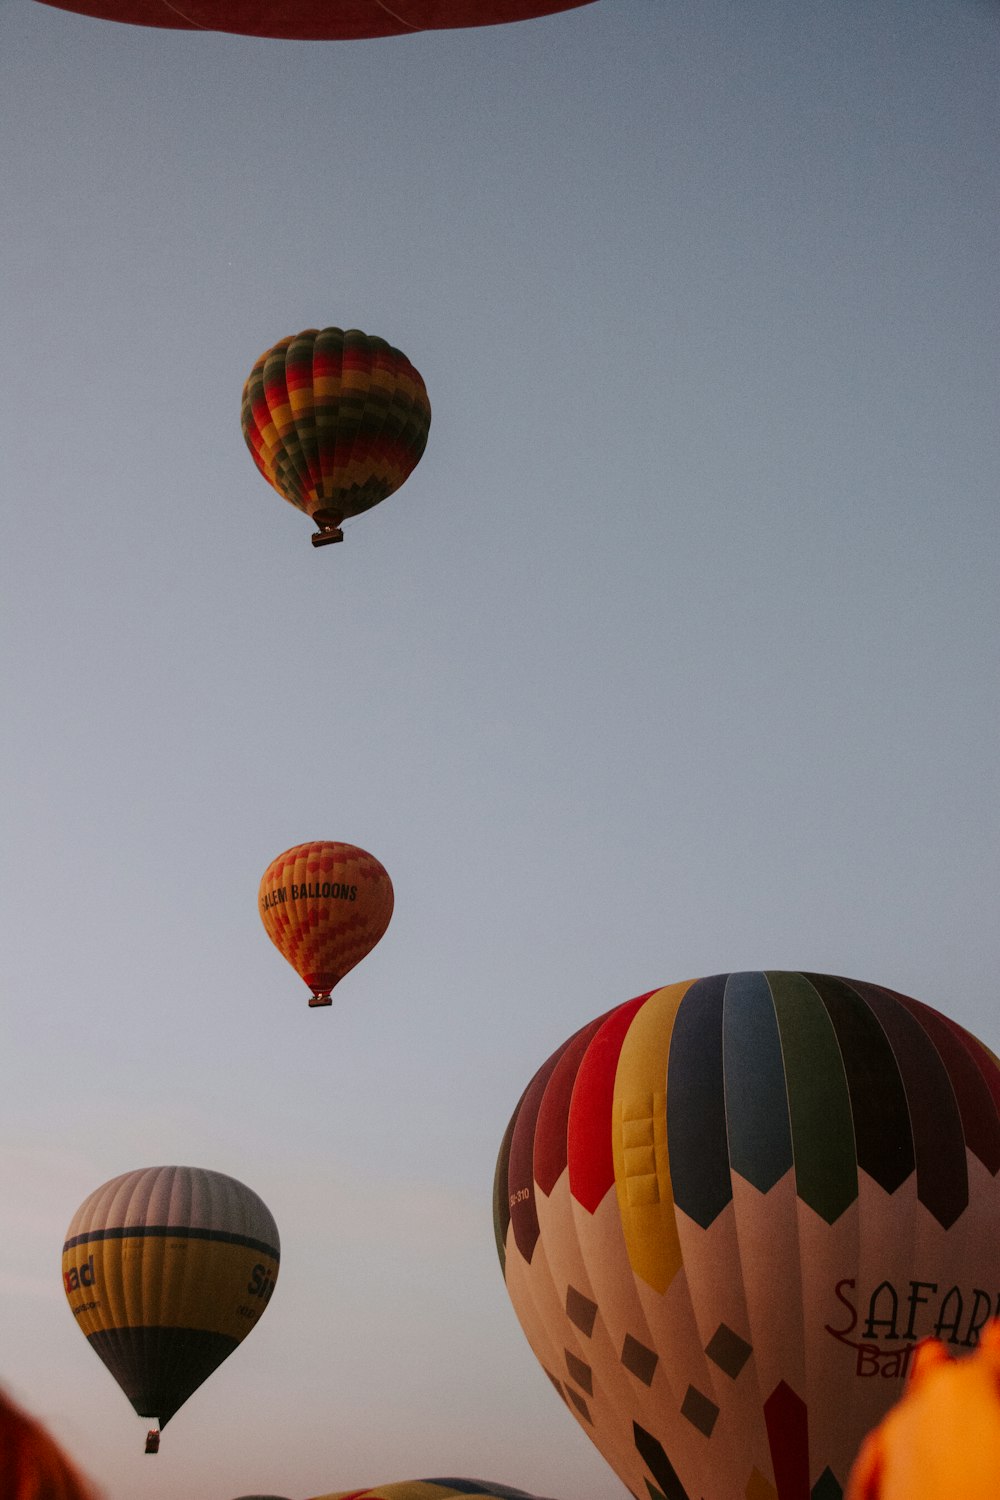 four hot air balloons on flight